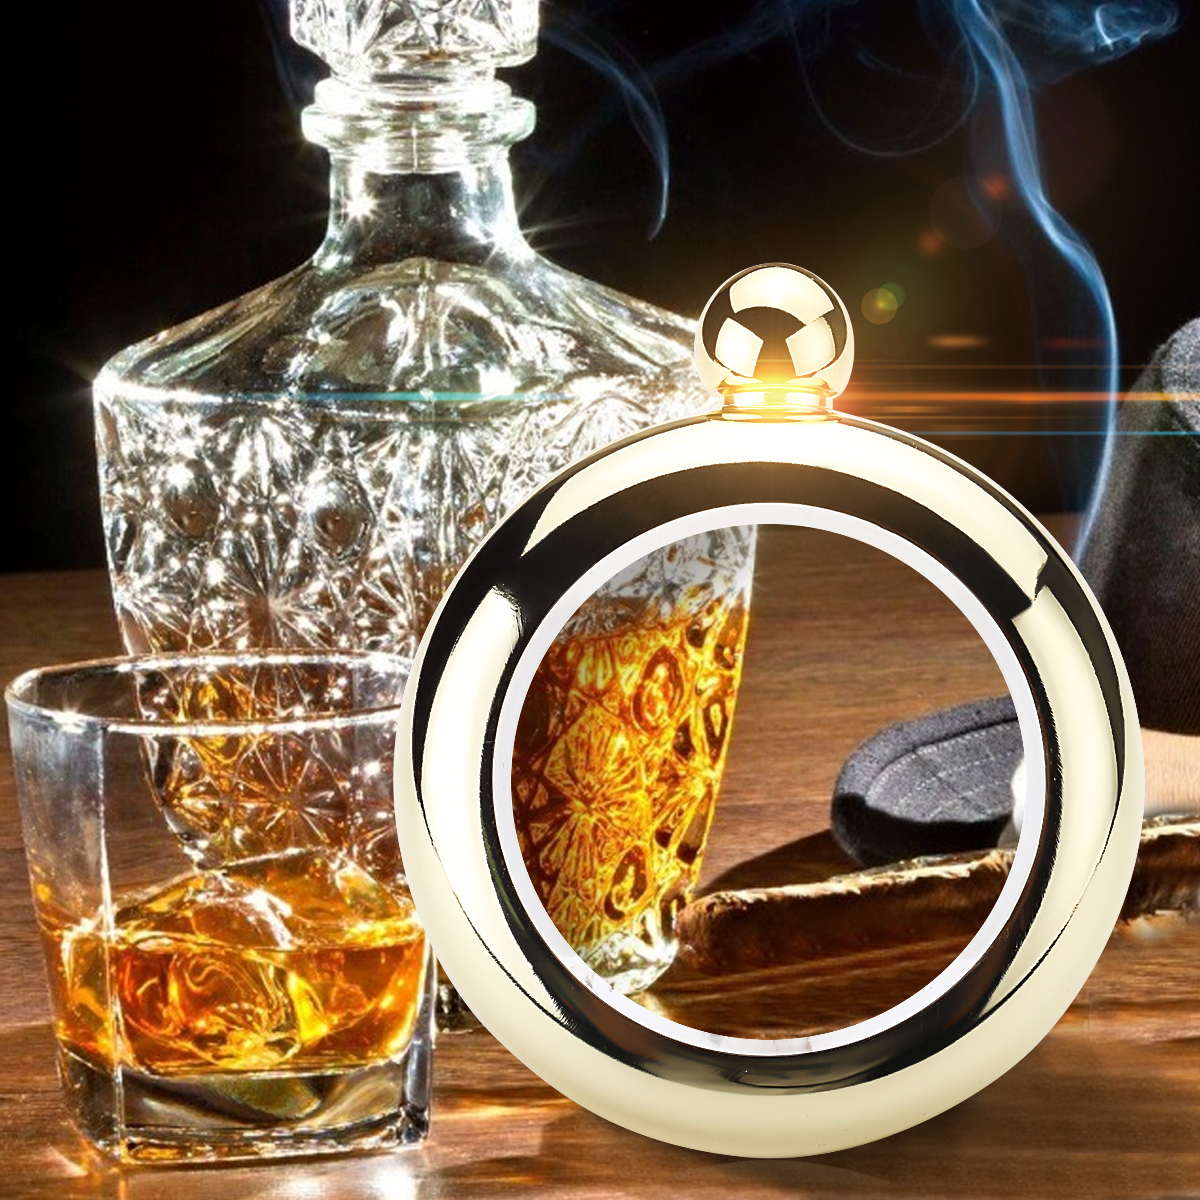 Bracelet-Bangle-Flask-Drinking-Stainless-Steel-Whiskey-Hidden-Hip-Flasket-Jewelry-Gadget-1235443-1